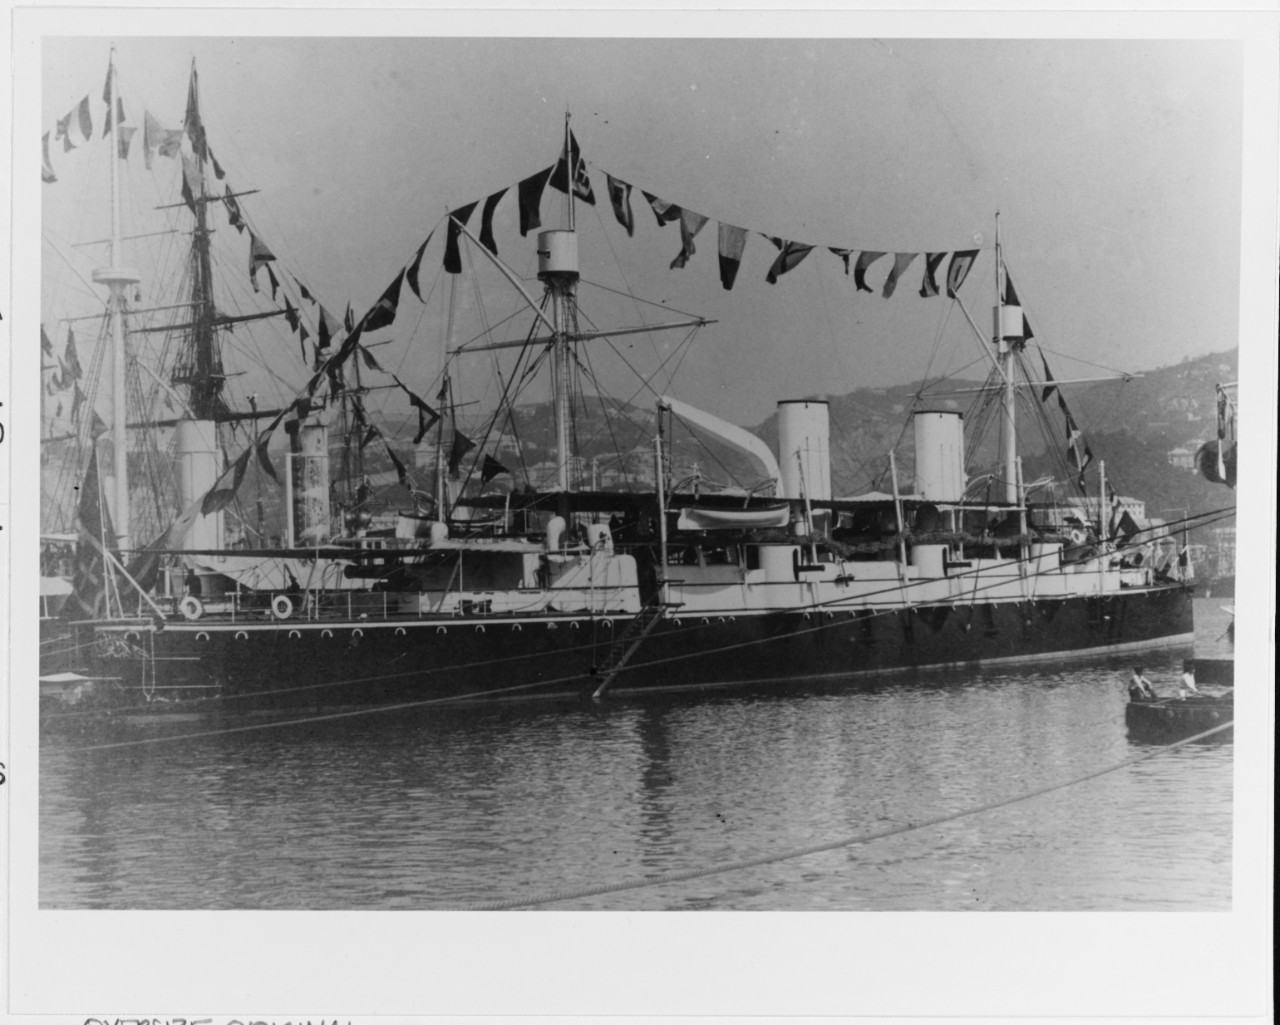 GIOVANNI BAUSAN (Italian protected cruiser, 1883-1920)